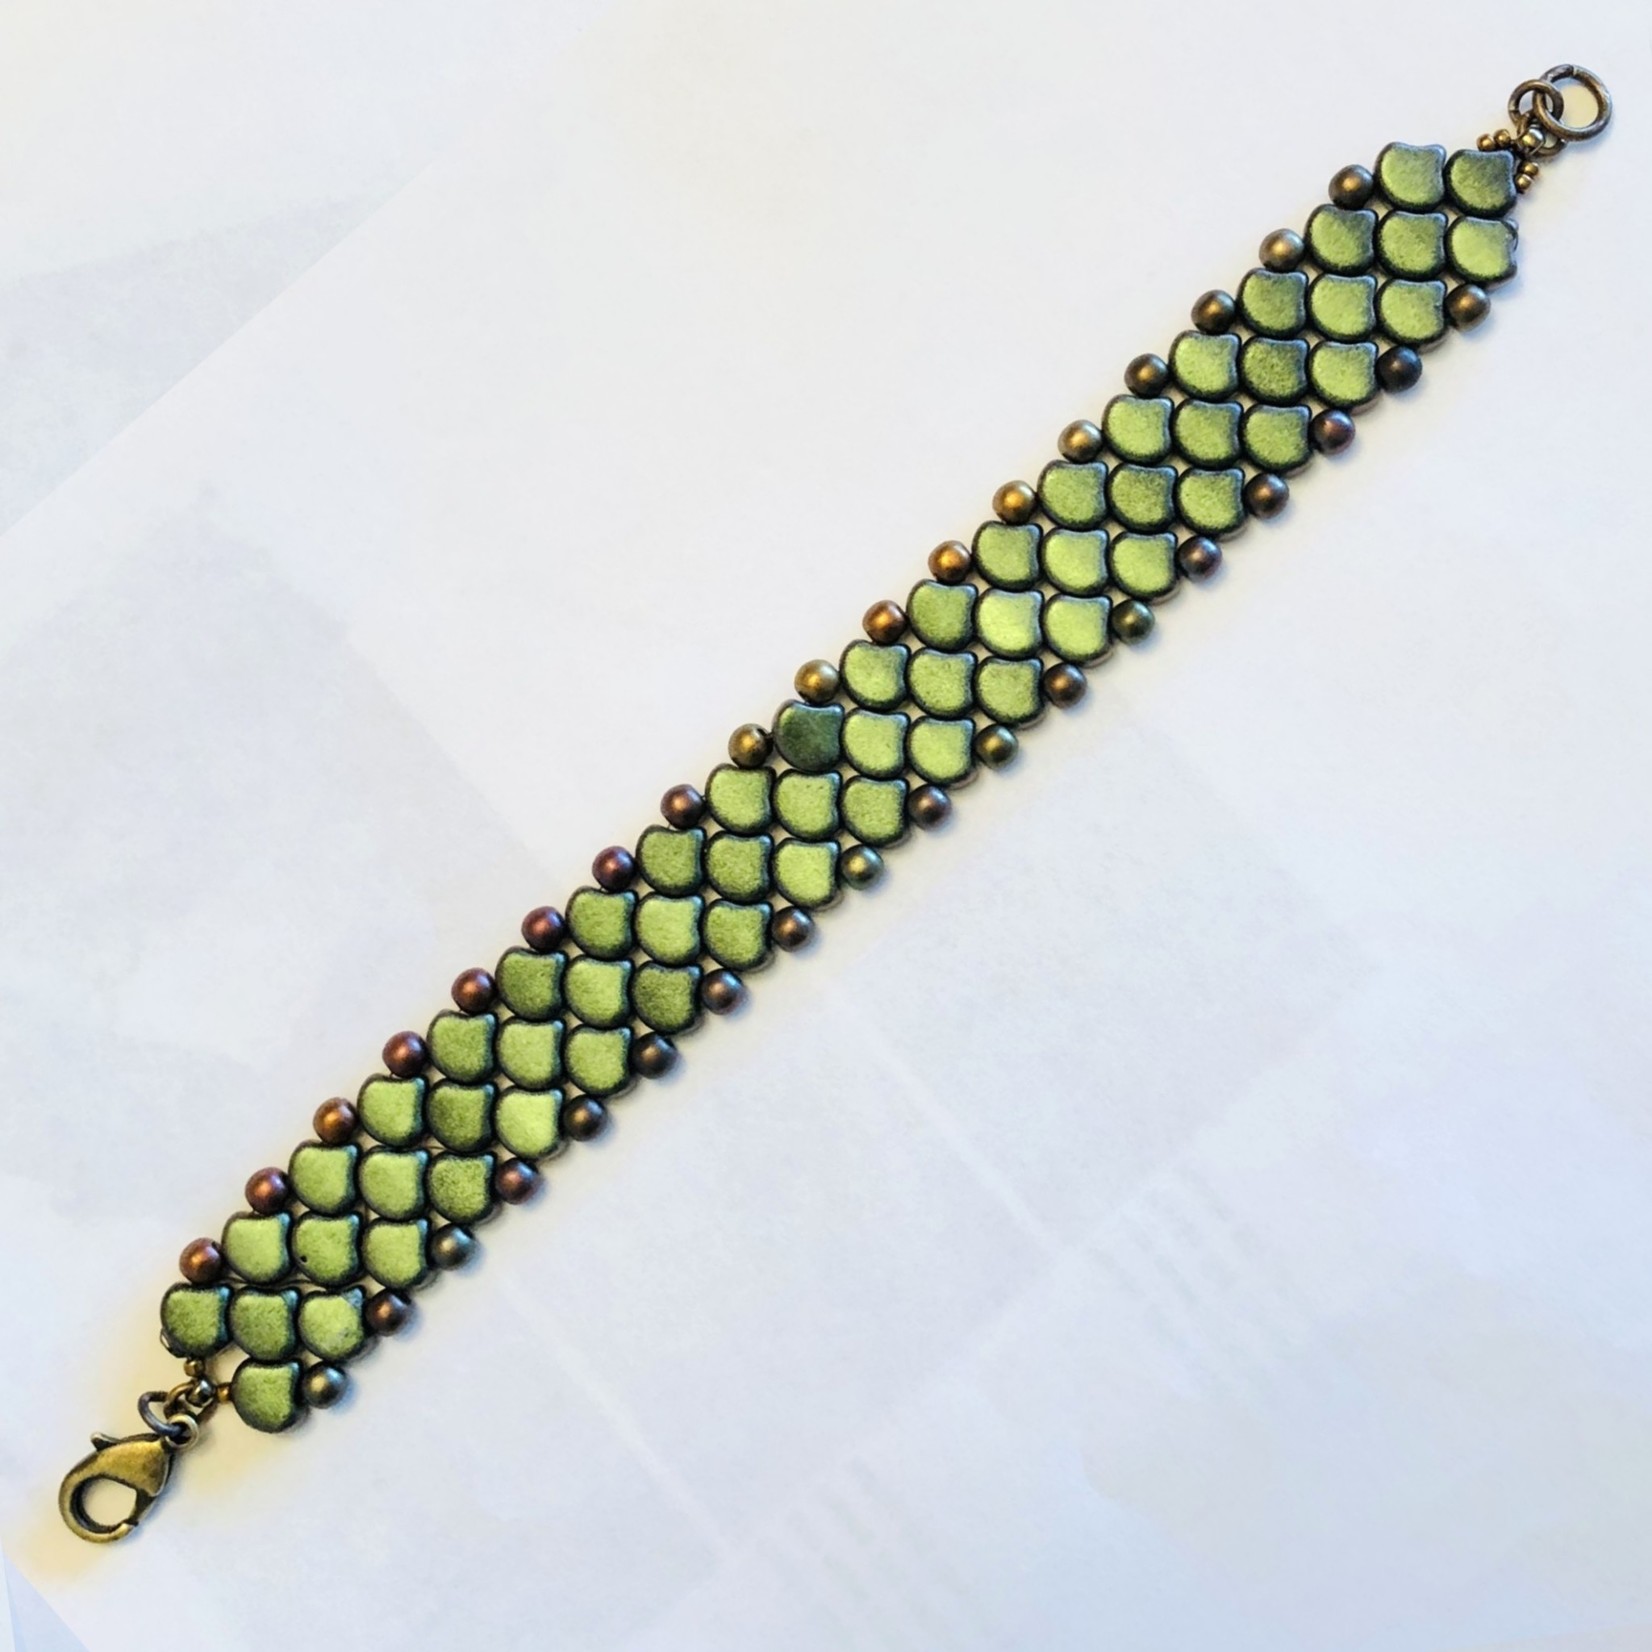 Matubo Ginko Beads 7.5mm Polychrome Sage/Citrus 22gm Tube